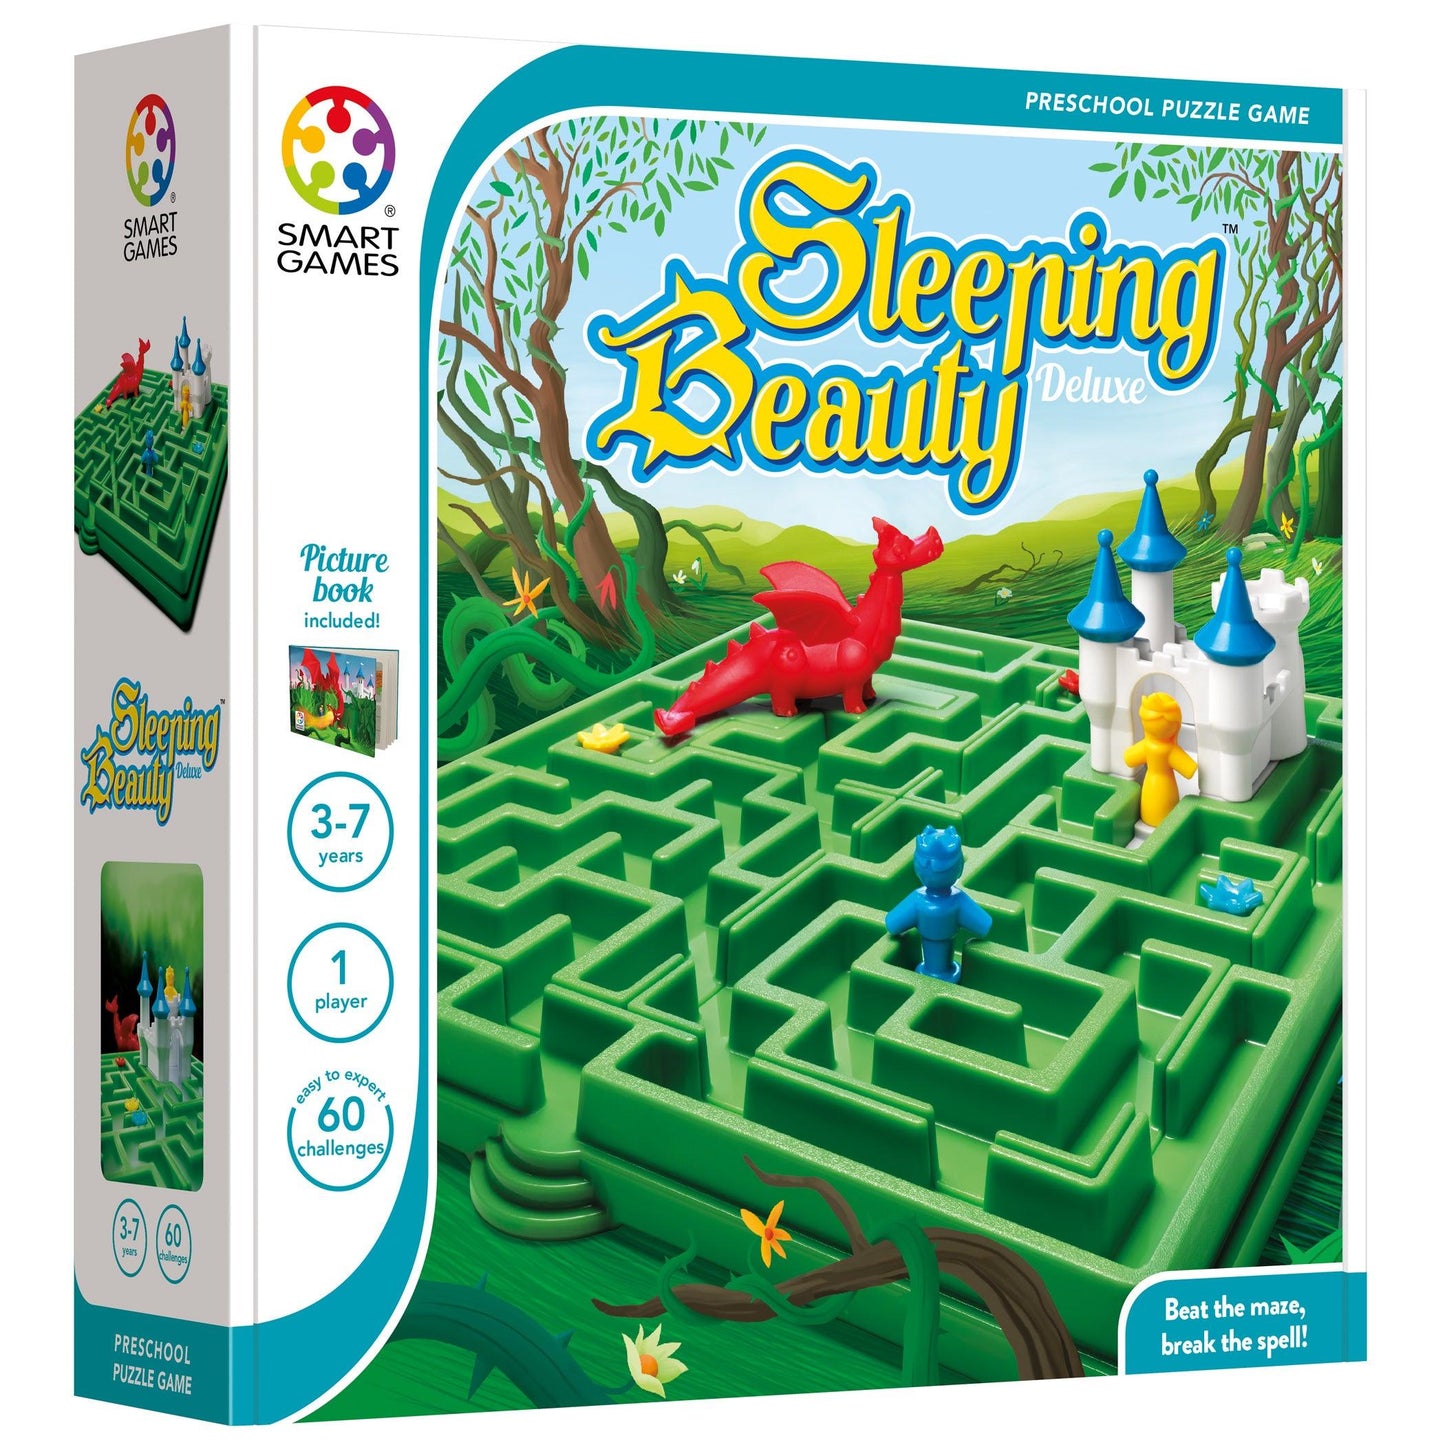 Sleeping Beauty™ Deluxe Preschool Puzzle Game - Loomini